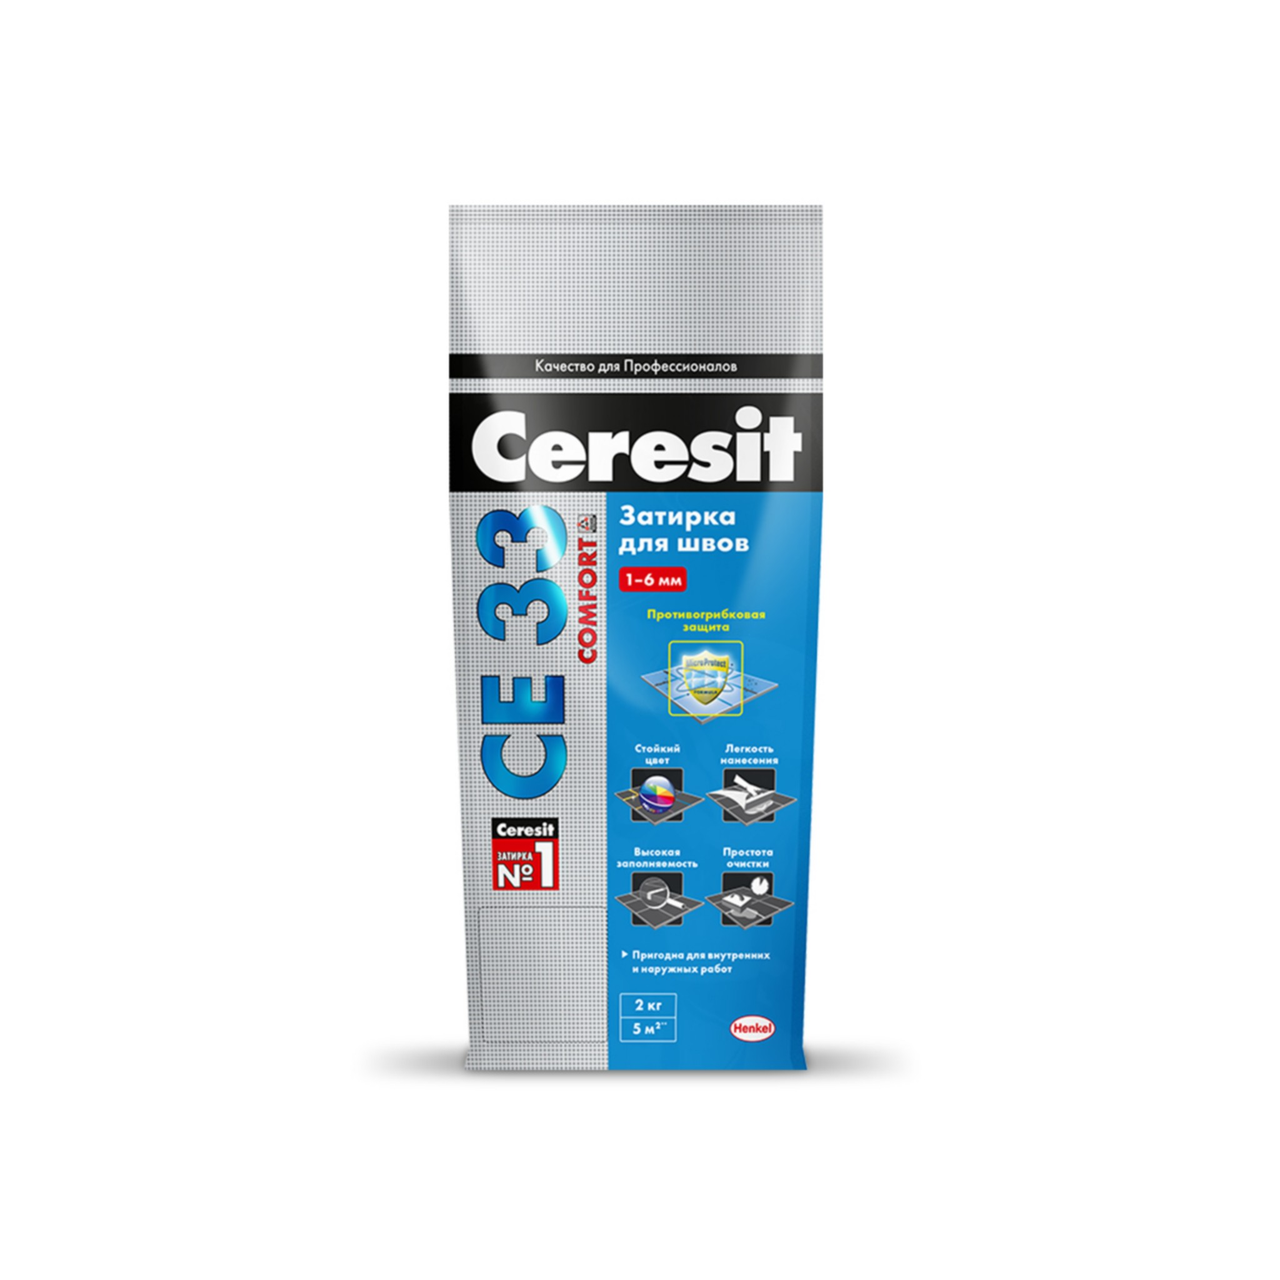 Ceresit  CE 33 Comfort затирка для узких швов, цвет: Манхеттен (Manhattan), 2 кг